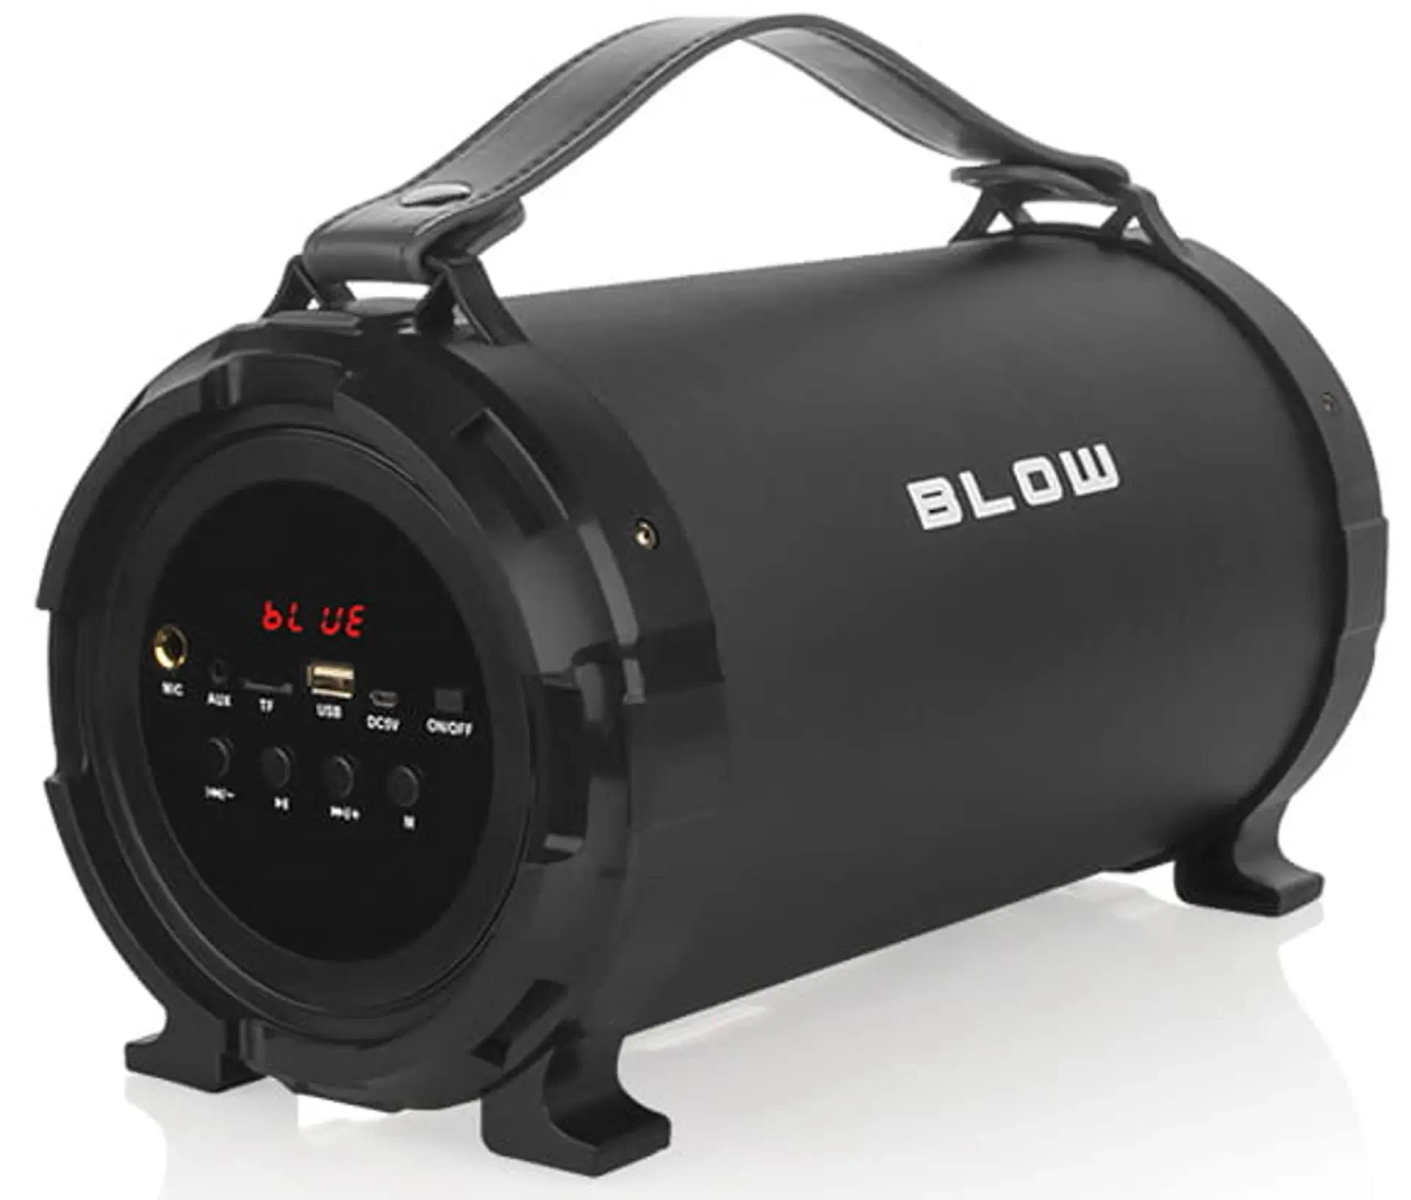 BLOW IN-ACT-AKGBLOGLO0016 Bluetooth Lautsprecher, Schwarz